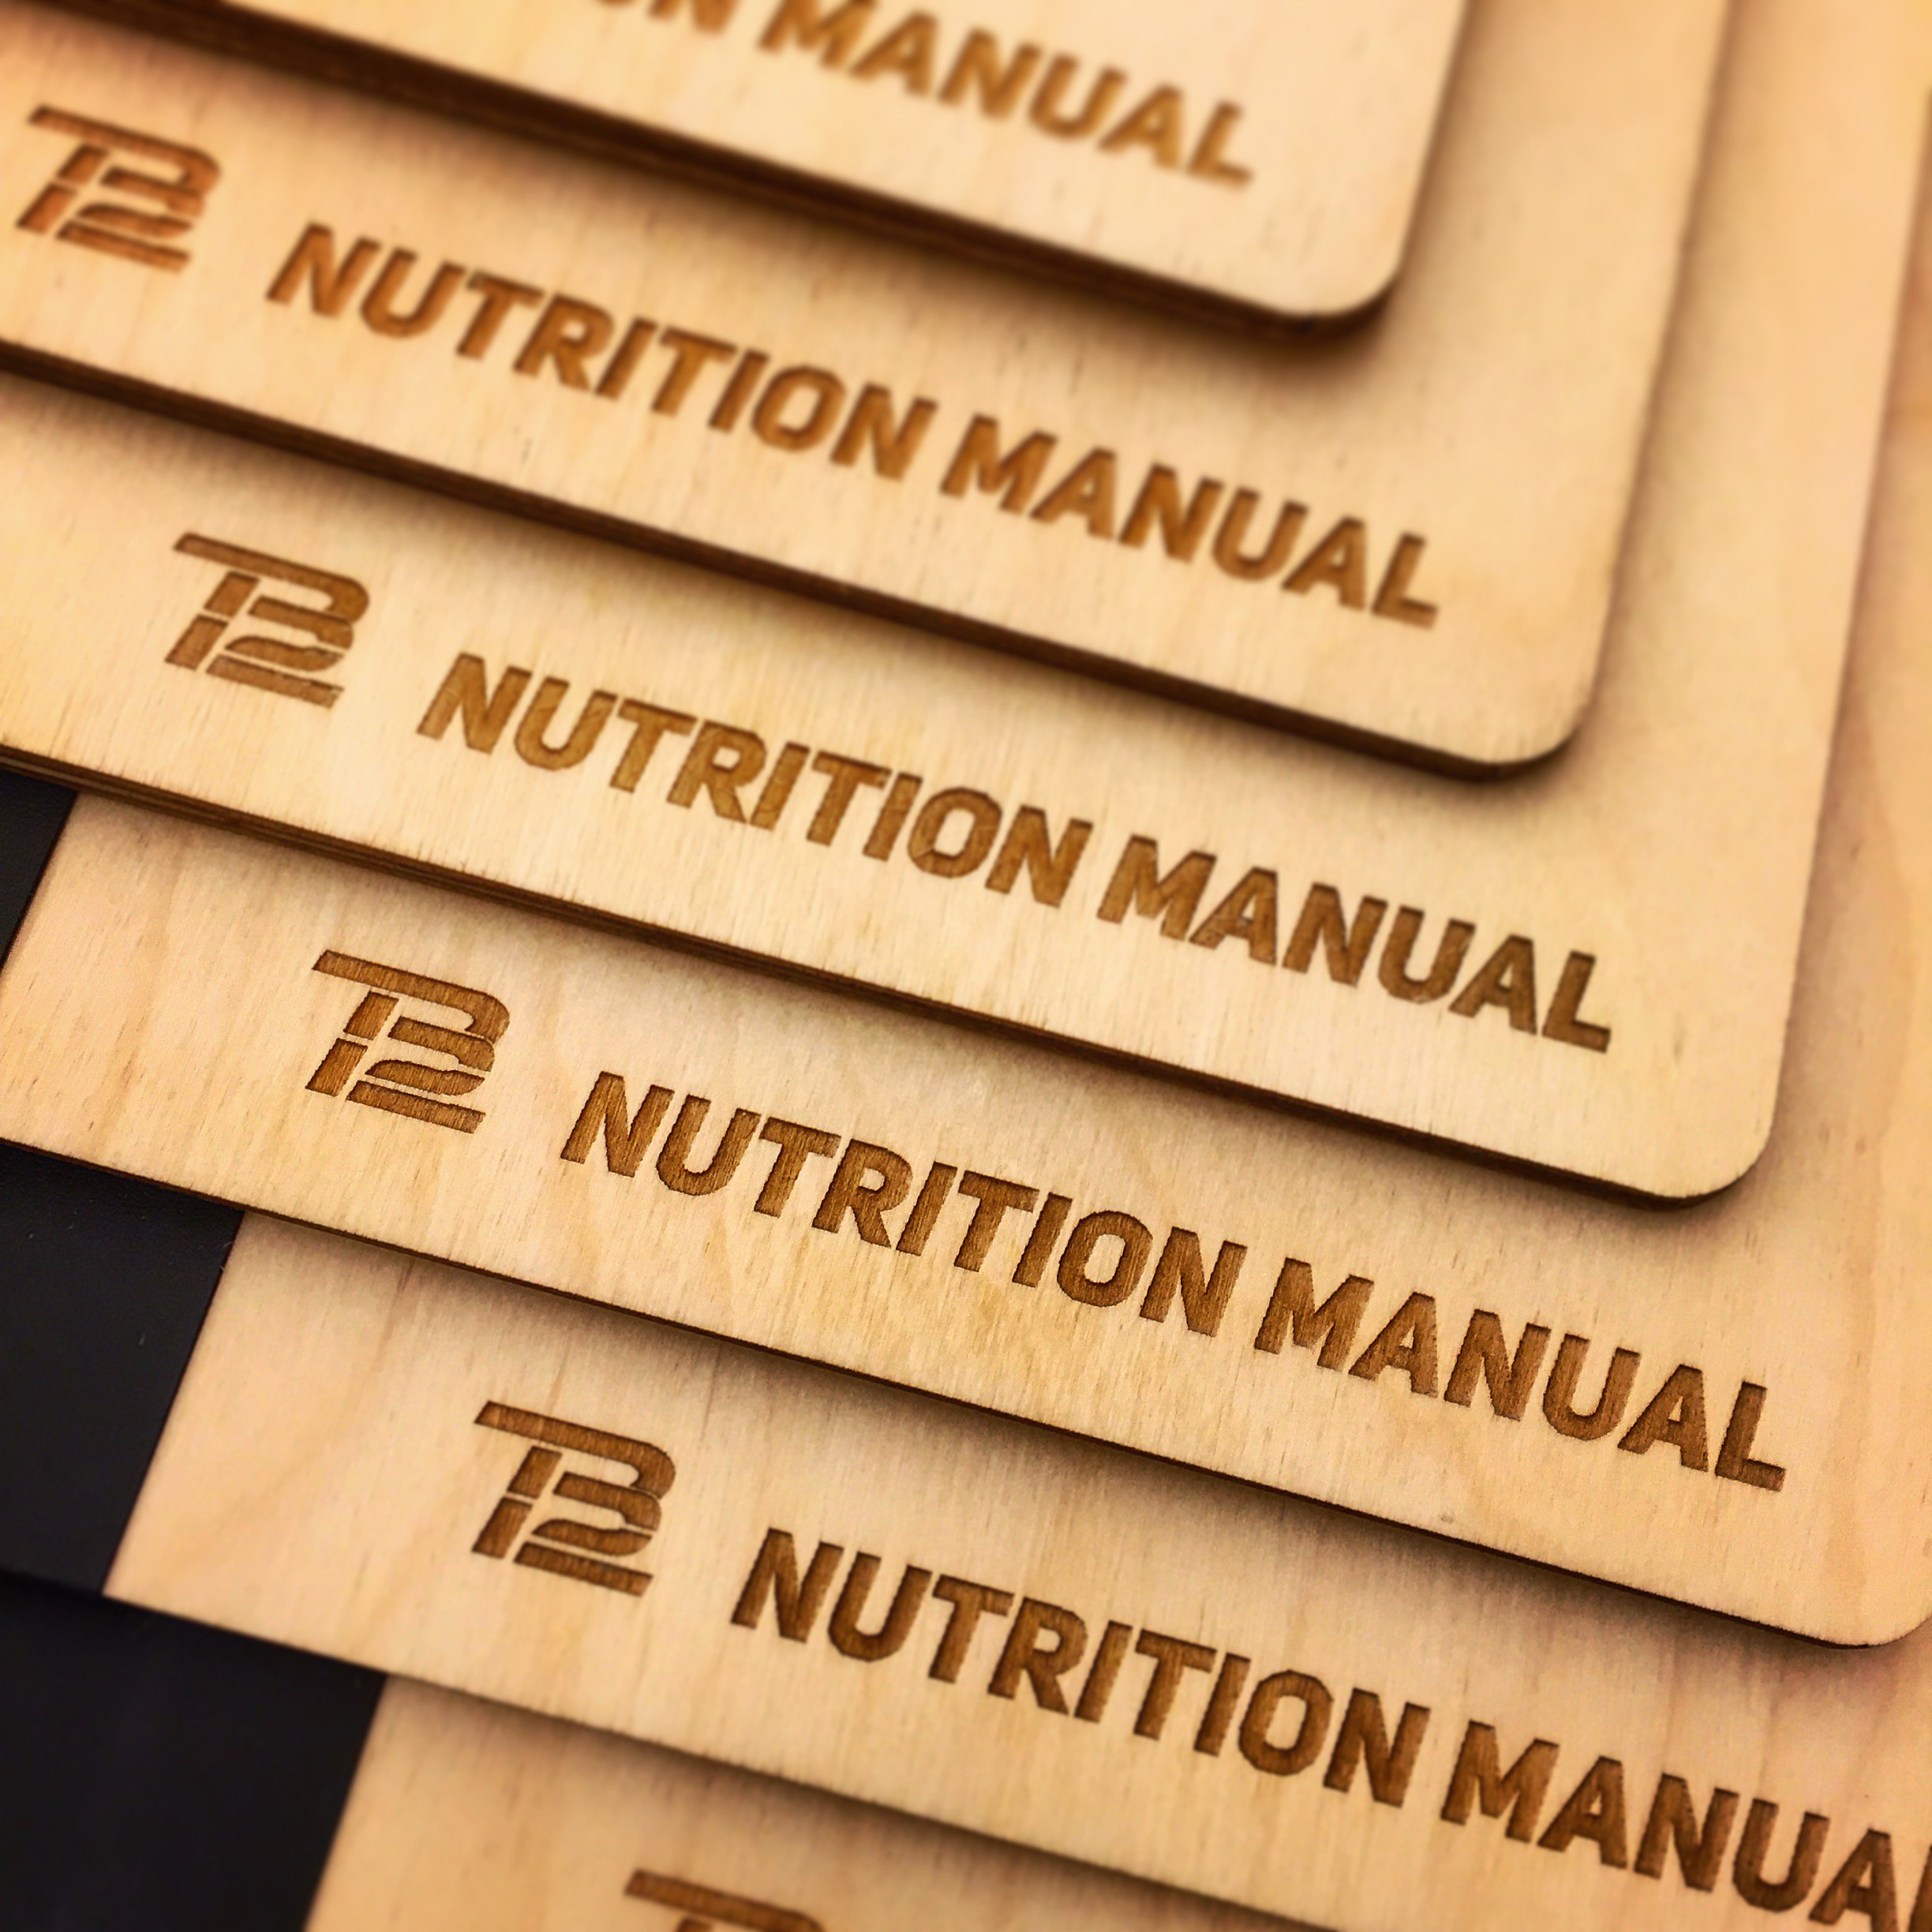 tb12 nutrition manual